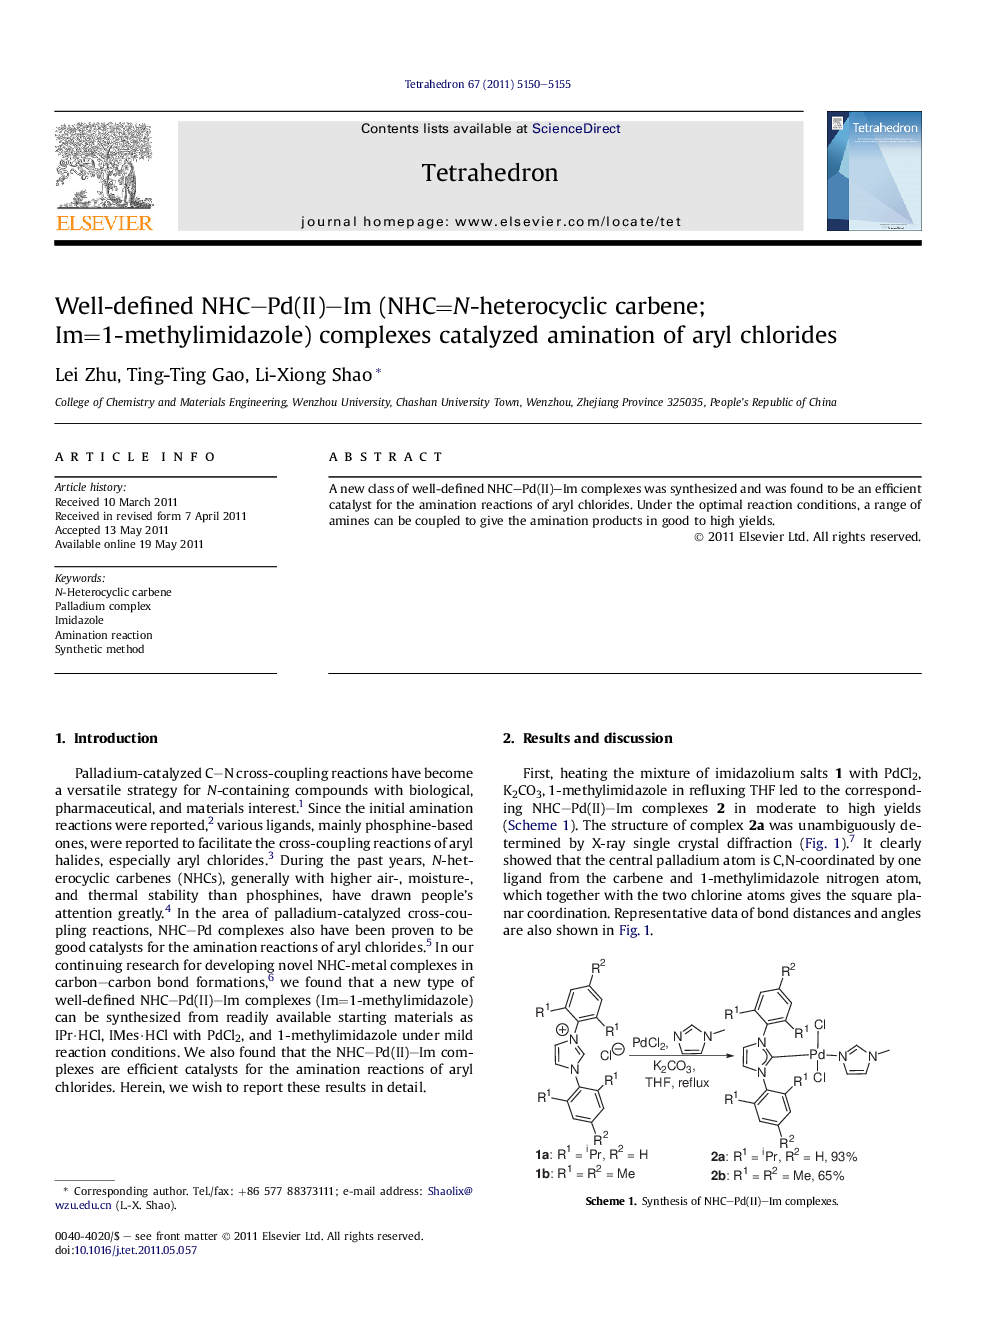 Well-defined NHC–Pd(II)–Im (NHC=N-heterocyclic carbene; Im=1-methylimidazole) complexes catalyzed amination of aryl chlorides